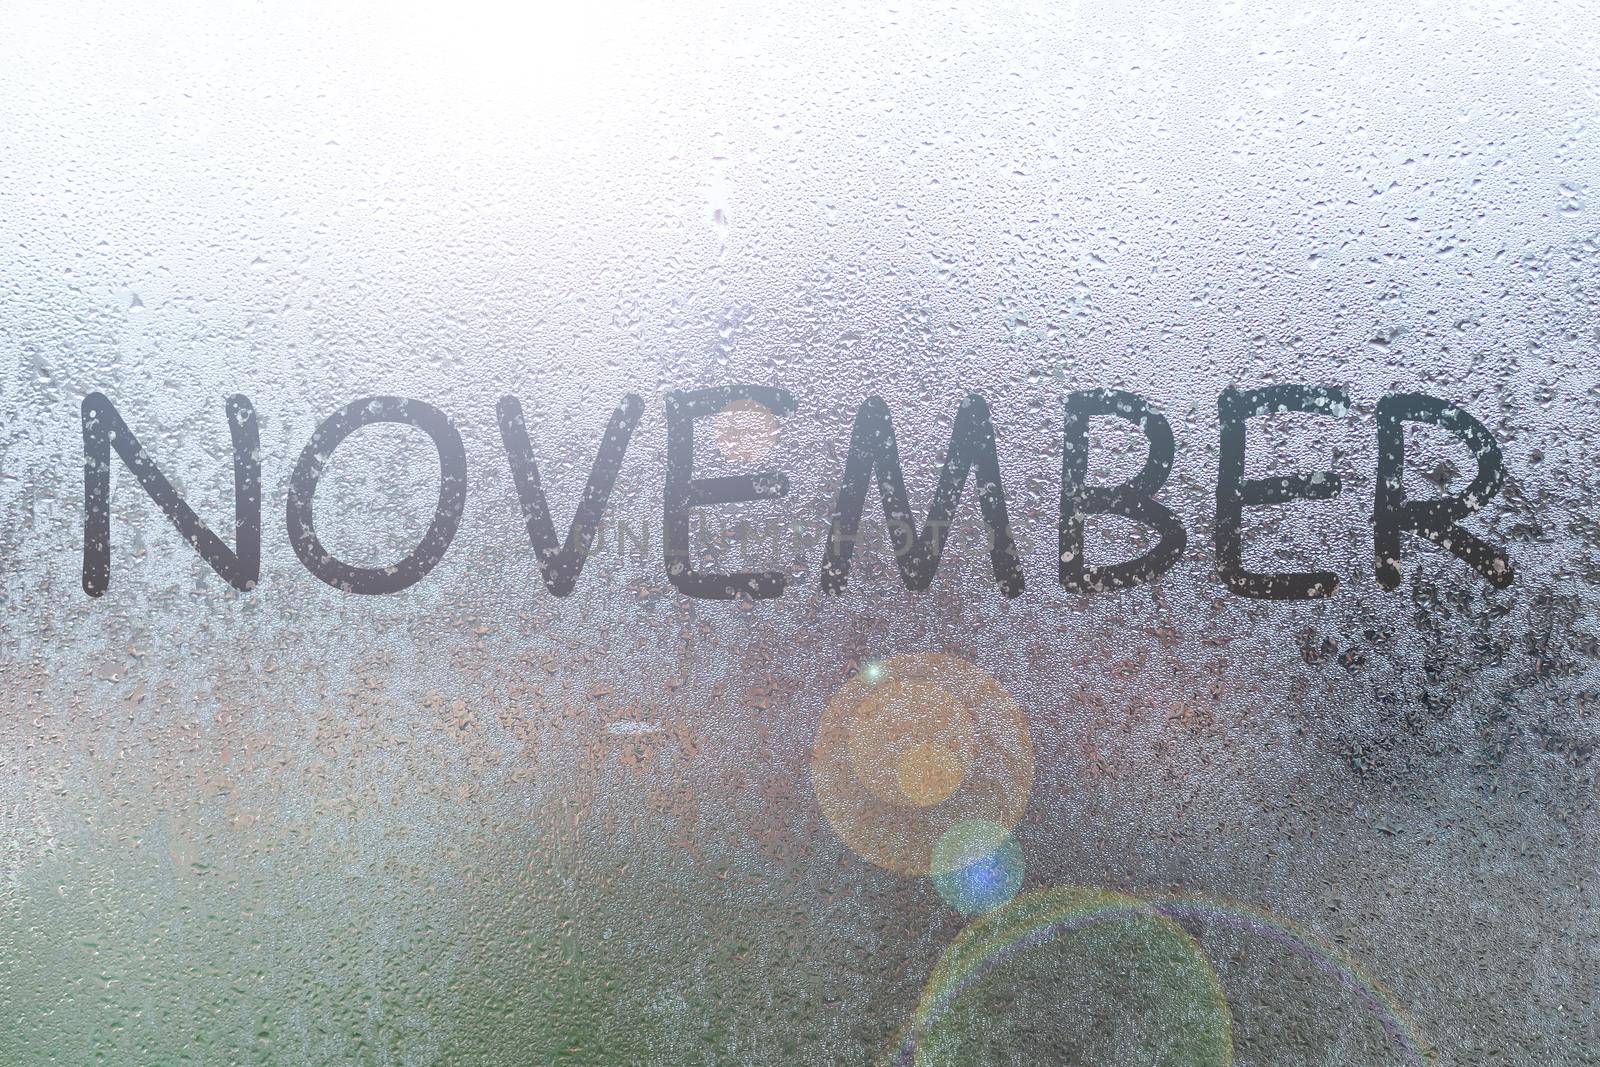 Autumn rain, the inscription on the sweaty glass - November.